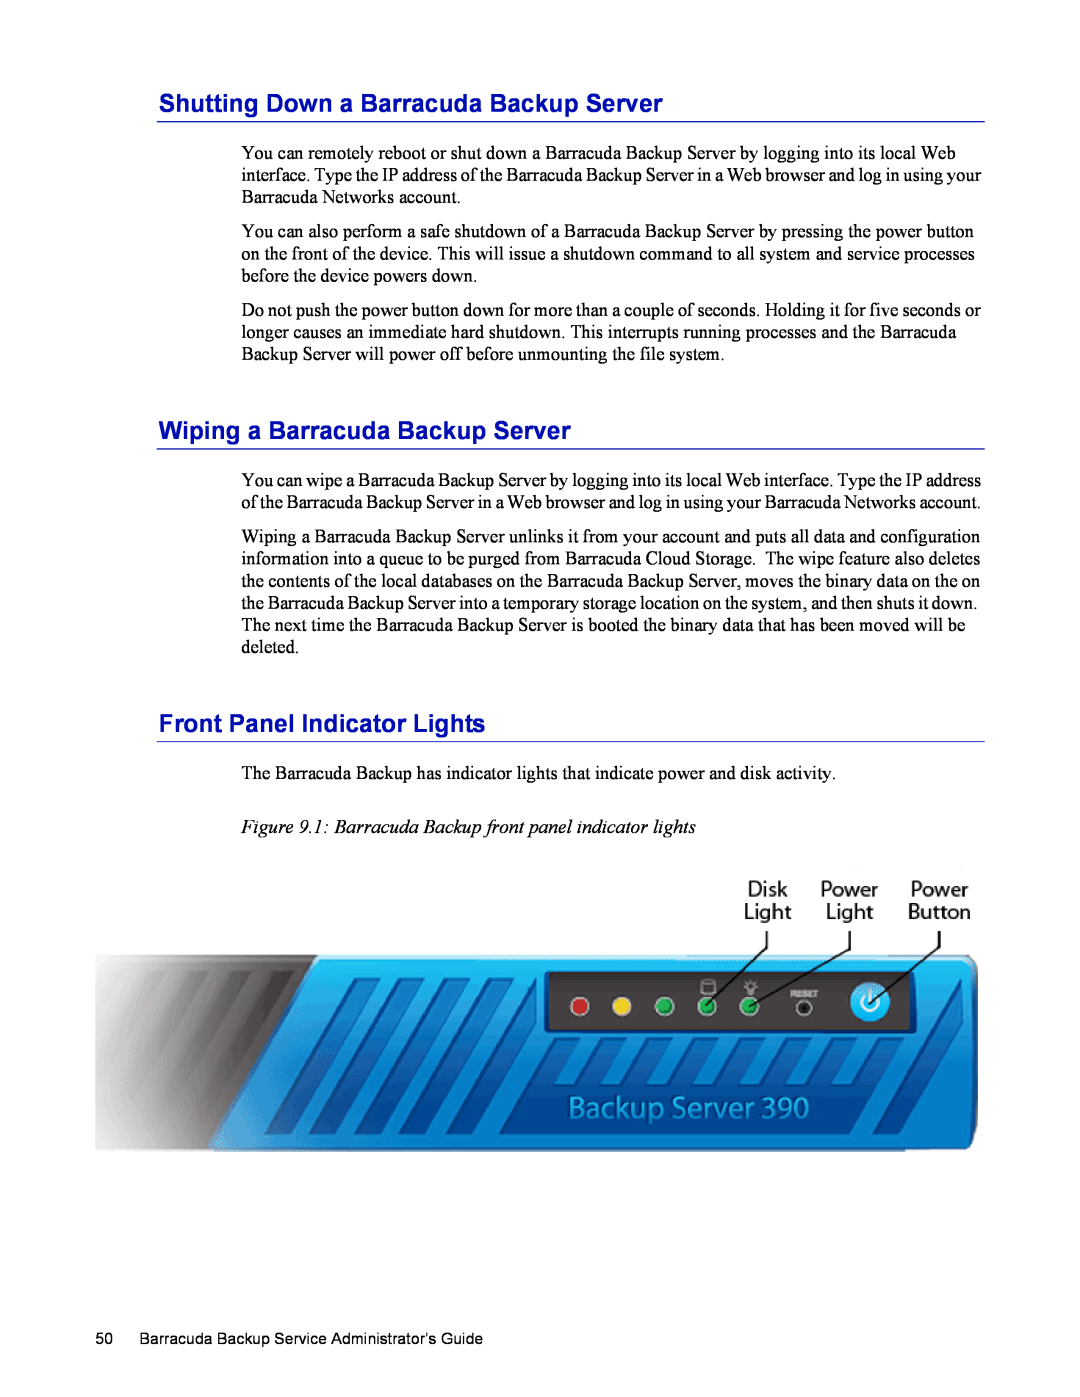 Barracuda Networks 4 manual Shutting Down a Barracuda Backup Server, Wiping a Barracuda Backup Server 